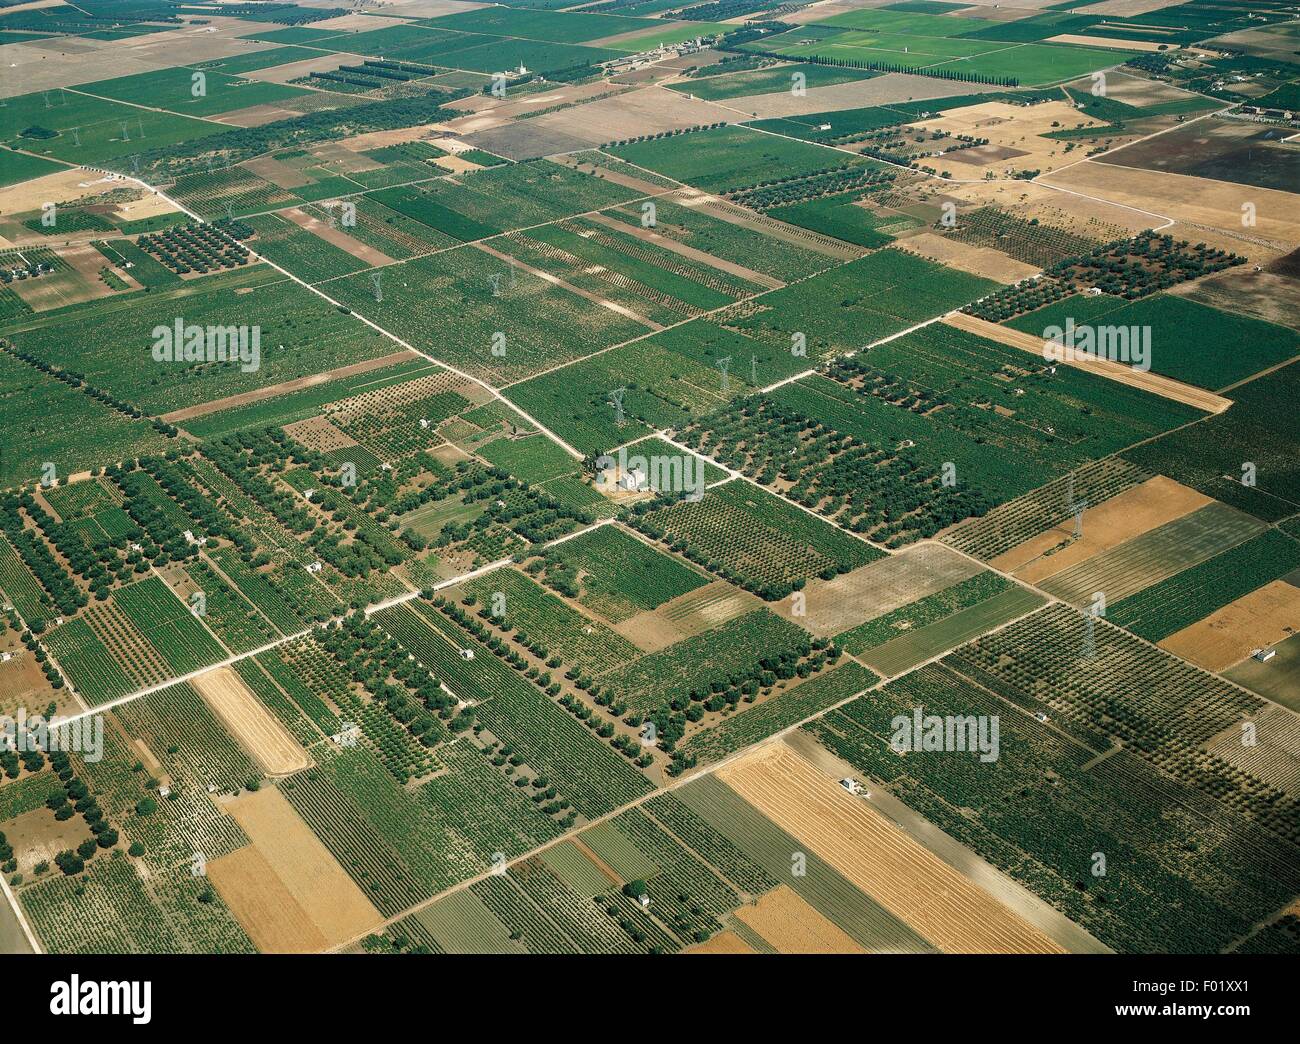 Aerial view of the Tavoliere delle Puglie plain - Apulia Region, Italy Stock Photo